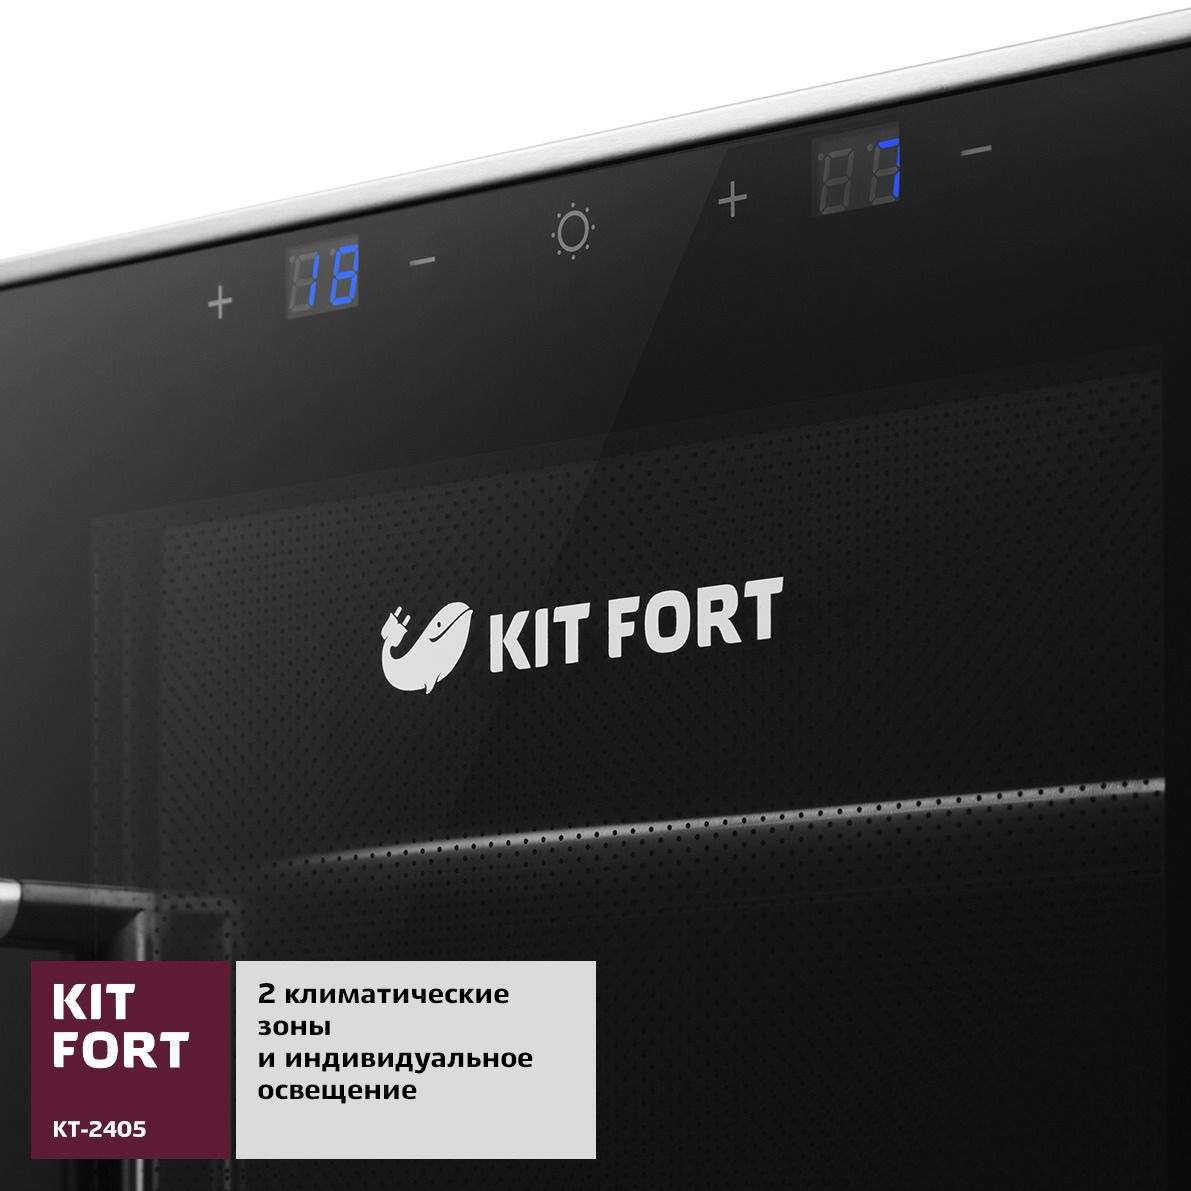   Kitfort, -2405